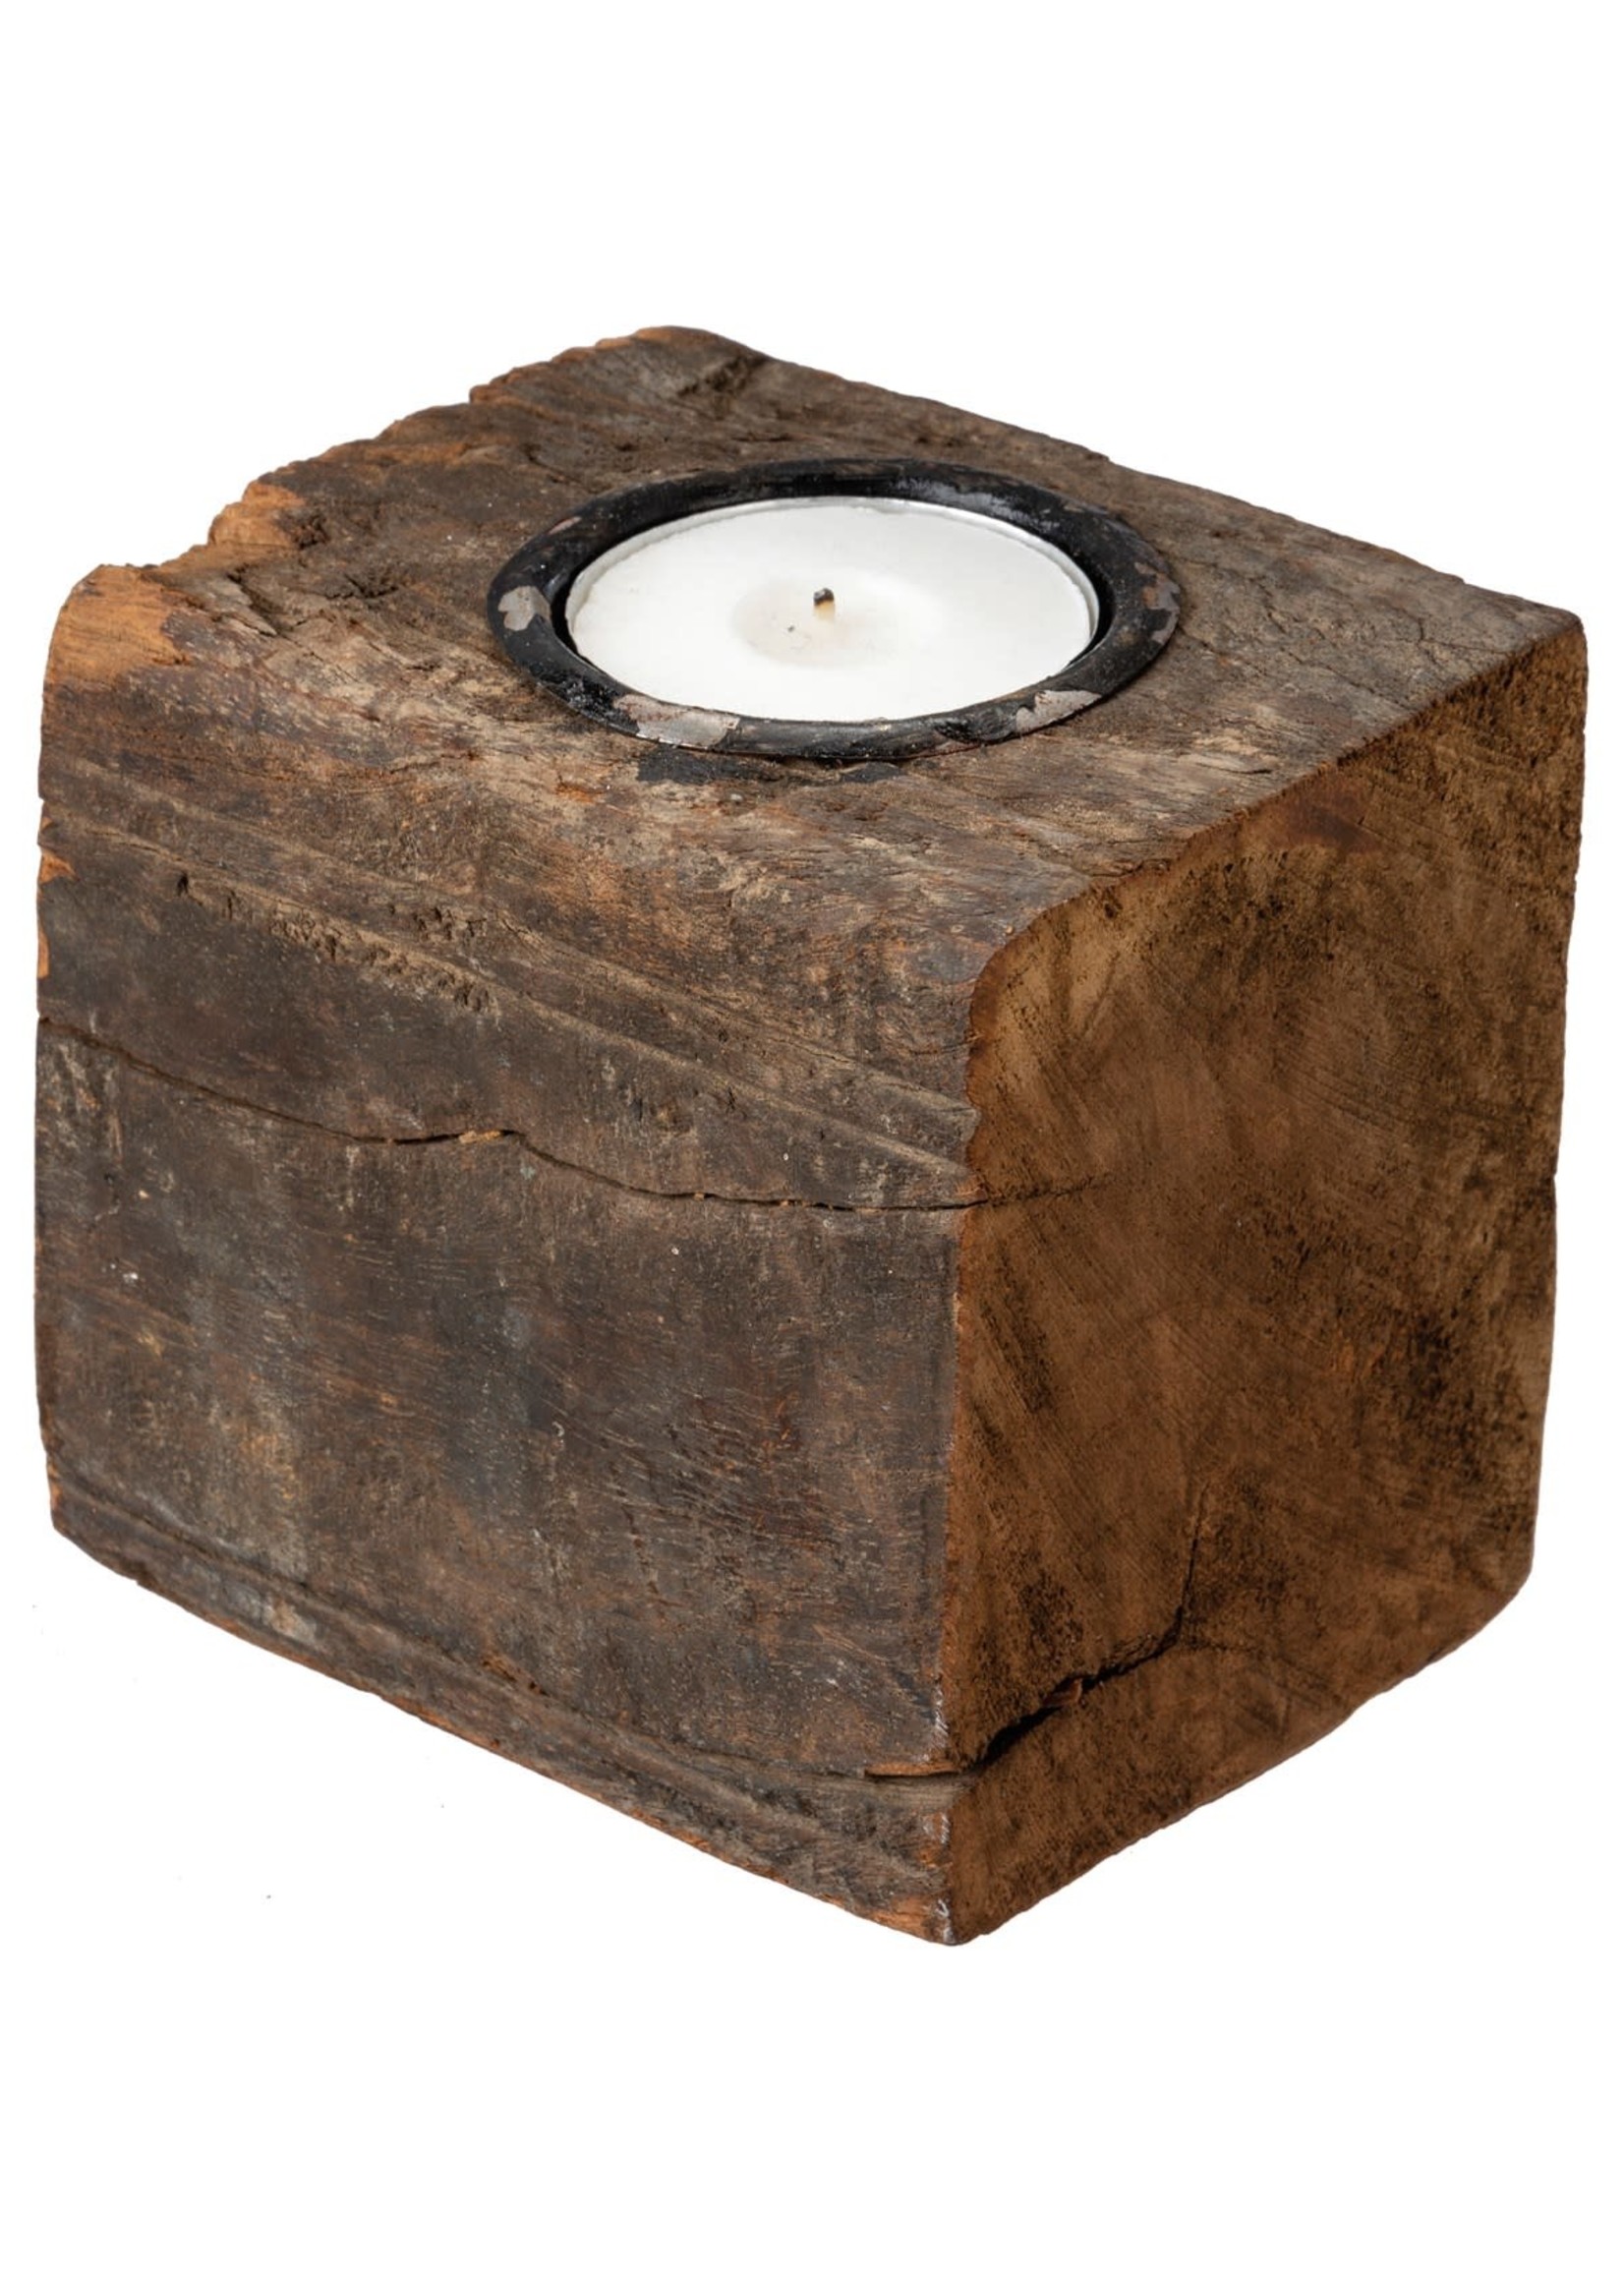 Candle Holder - Wood Block